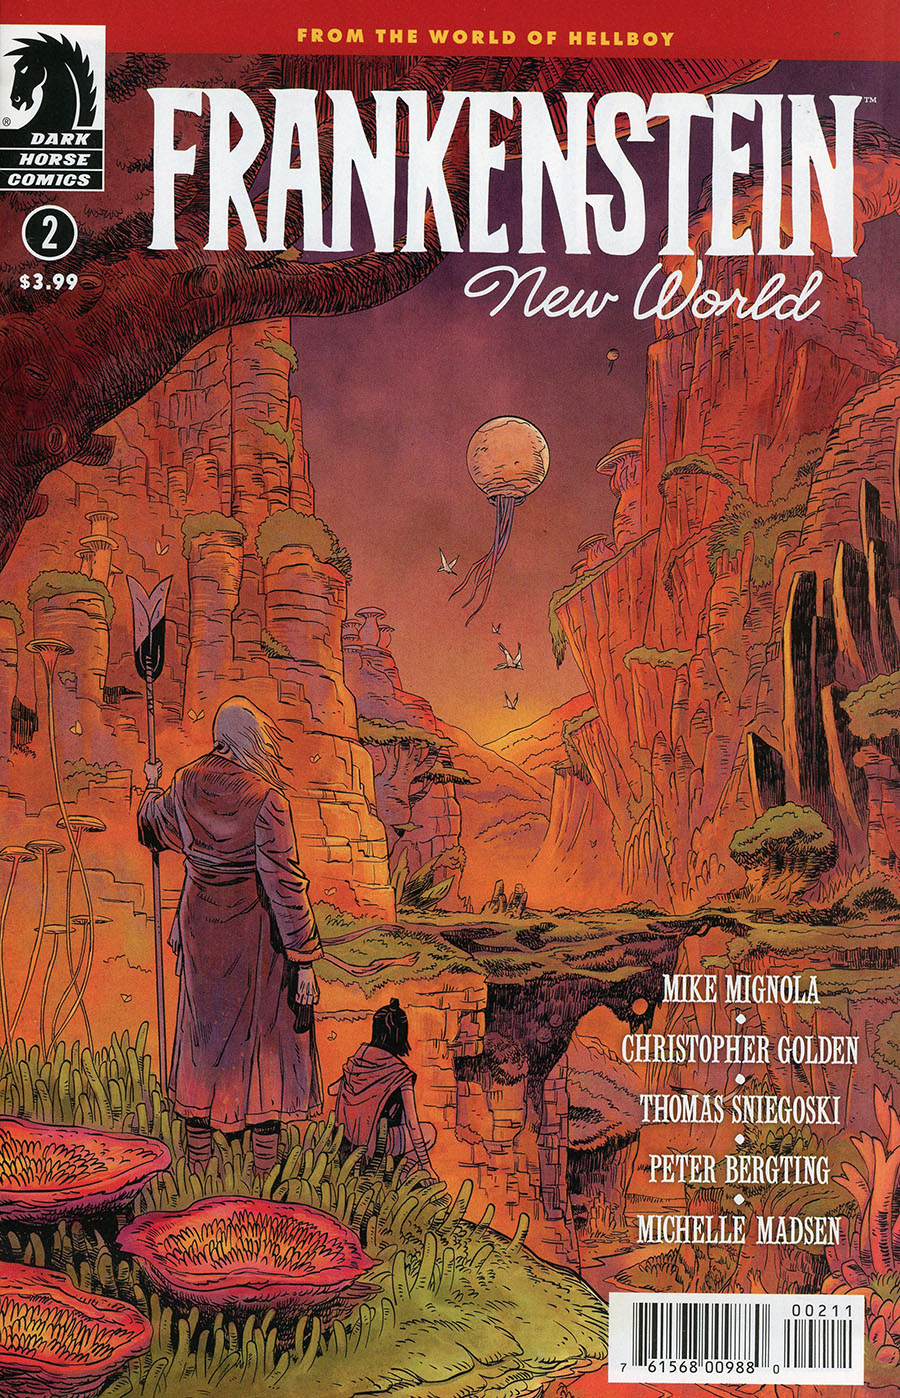 Frankenstein New World #2 Cover A Regular Peter Bergting Cover